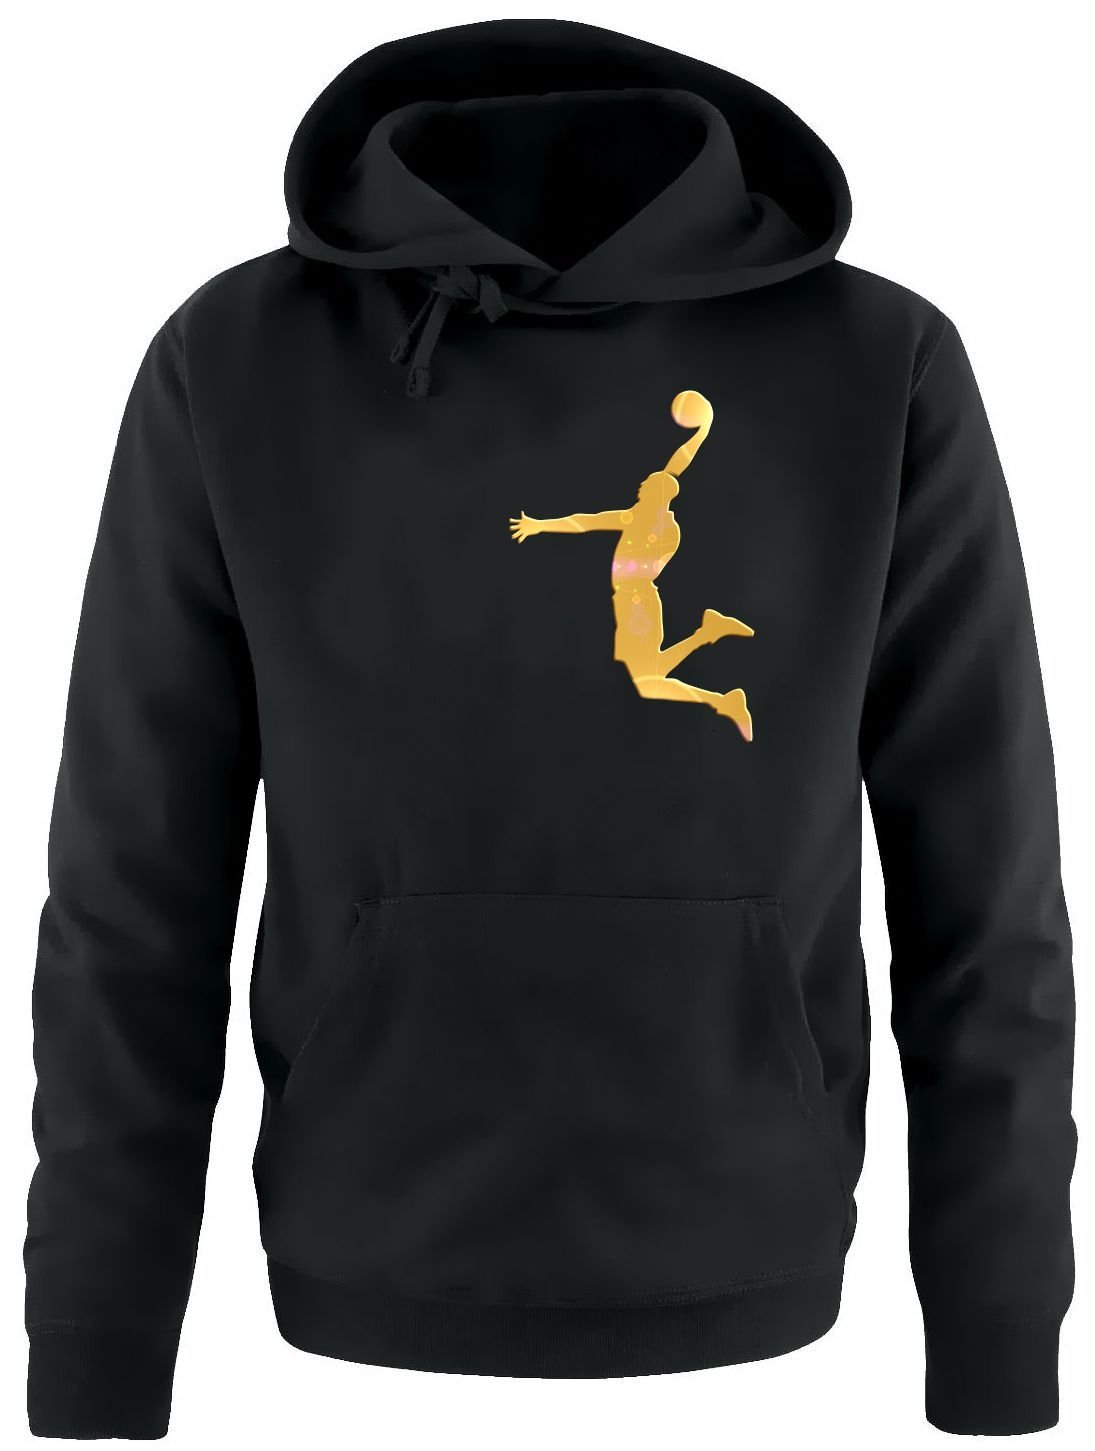 Coole-Fun-T-Shirts Dunk Basketball Slam Dunkin Kinder Sweatshirt mit Kapuze Hoodie schwarz-Gold, Gr.140cm